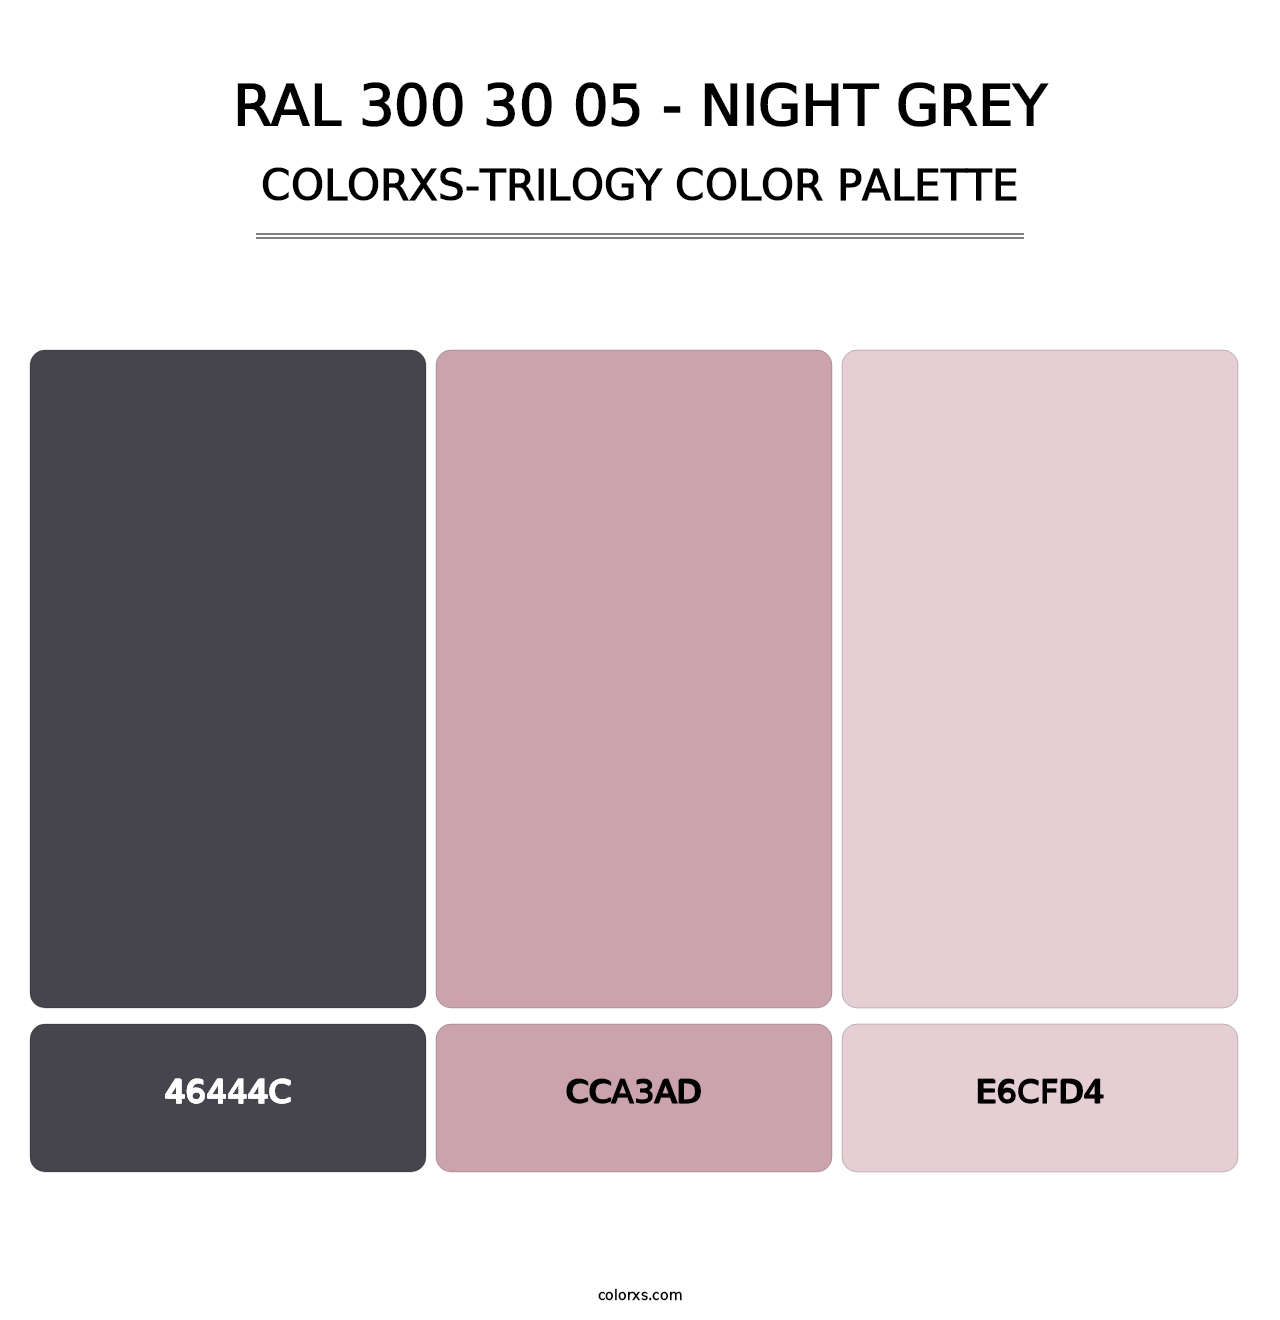 RAL 300 30 05 - Night Grey - Colorxs Trilogy Palette